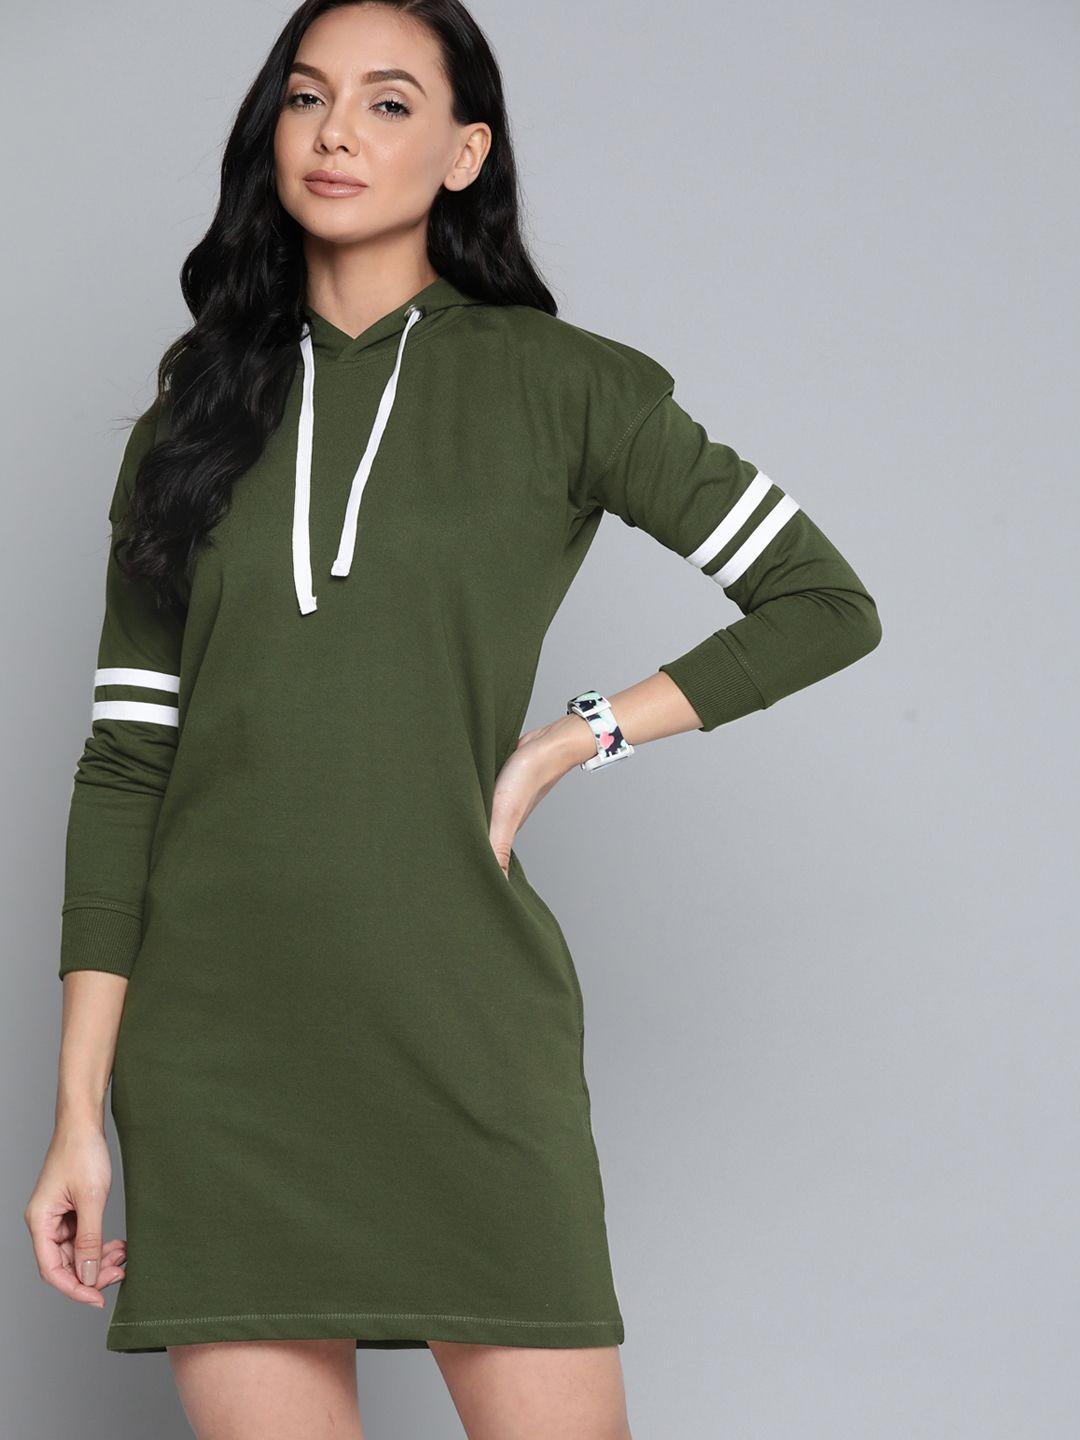 harvard olive green solid hooded sweatshirt dress